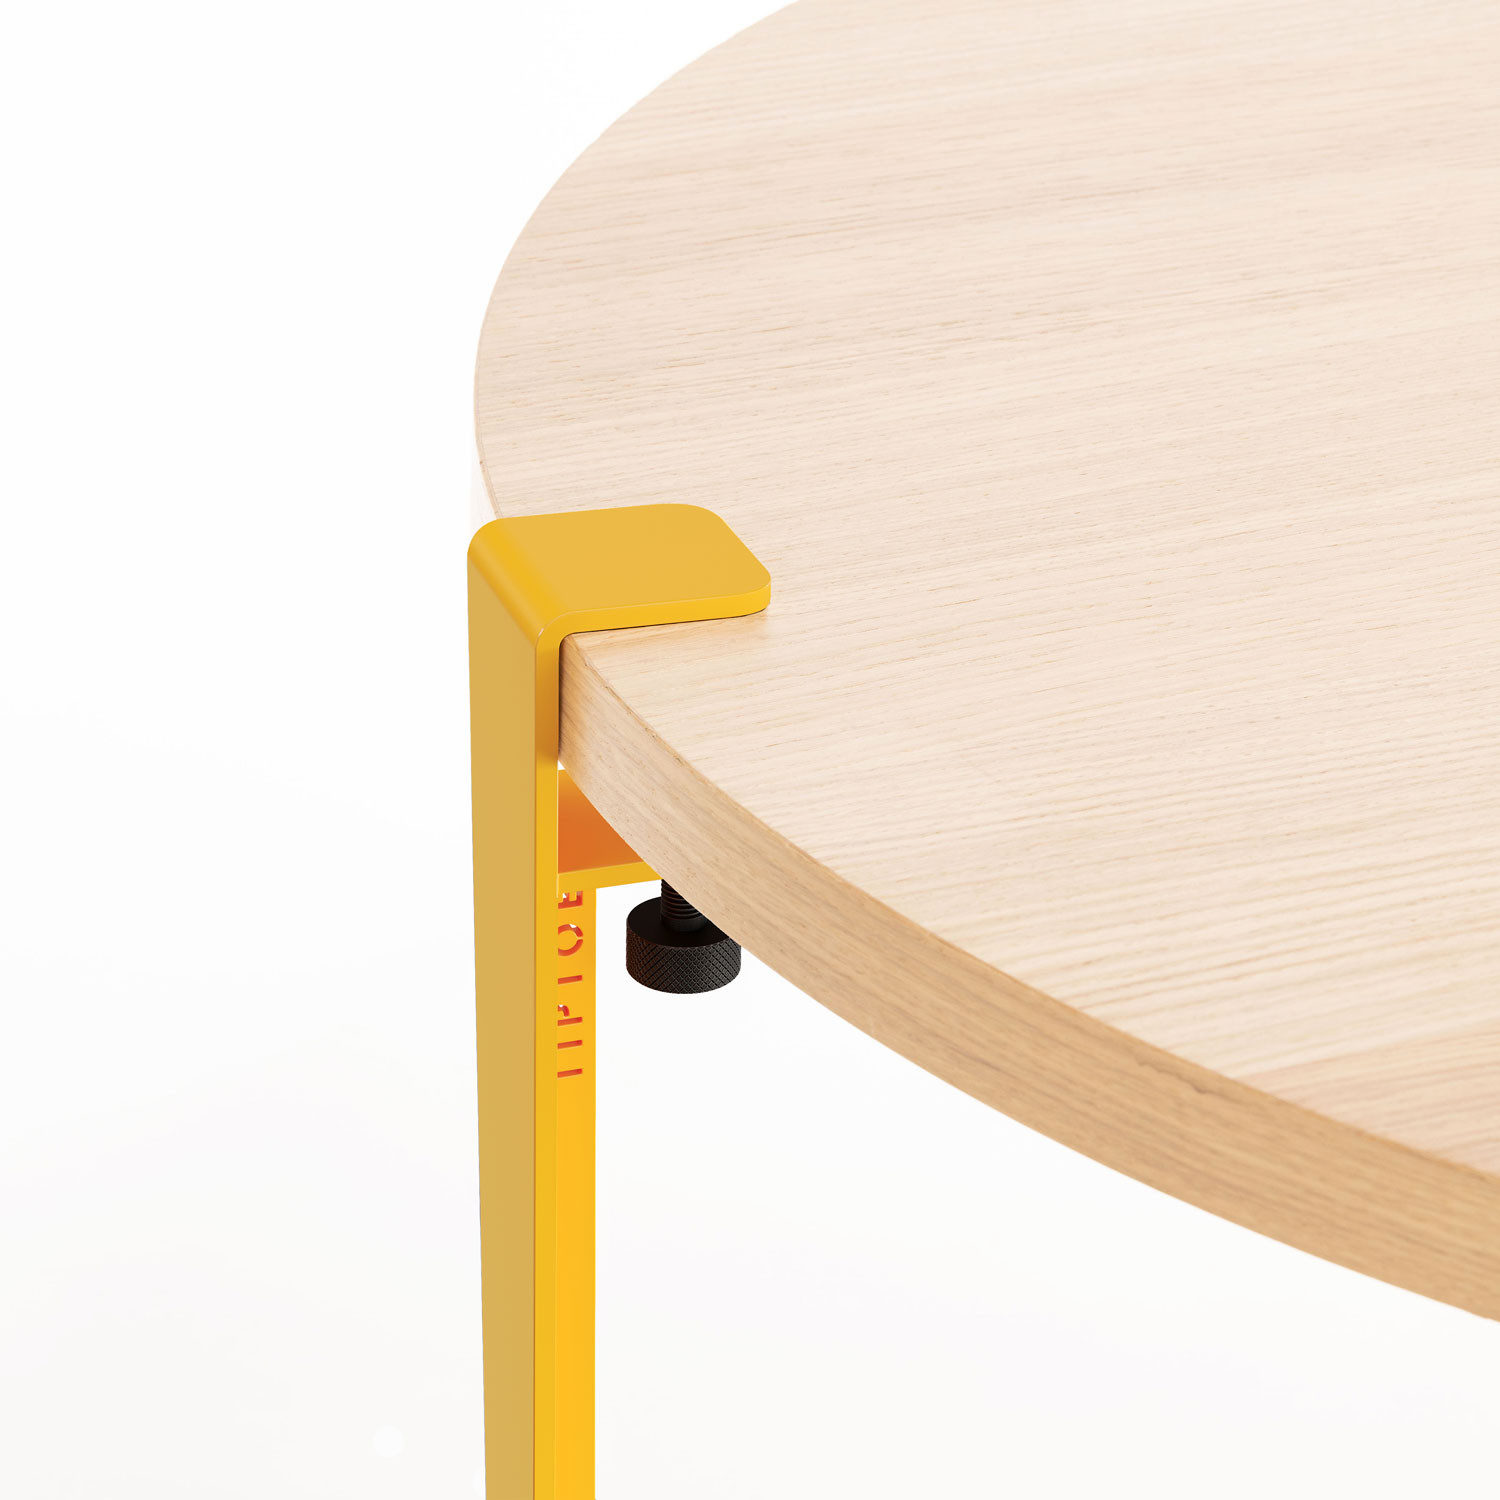 SURF coffee table – solid oak